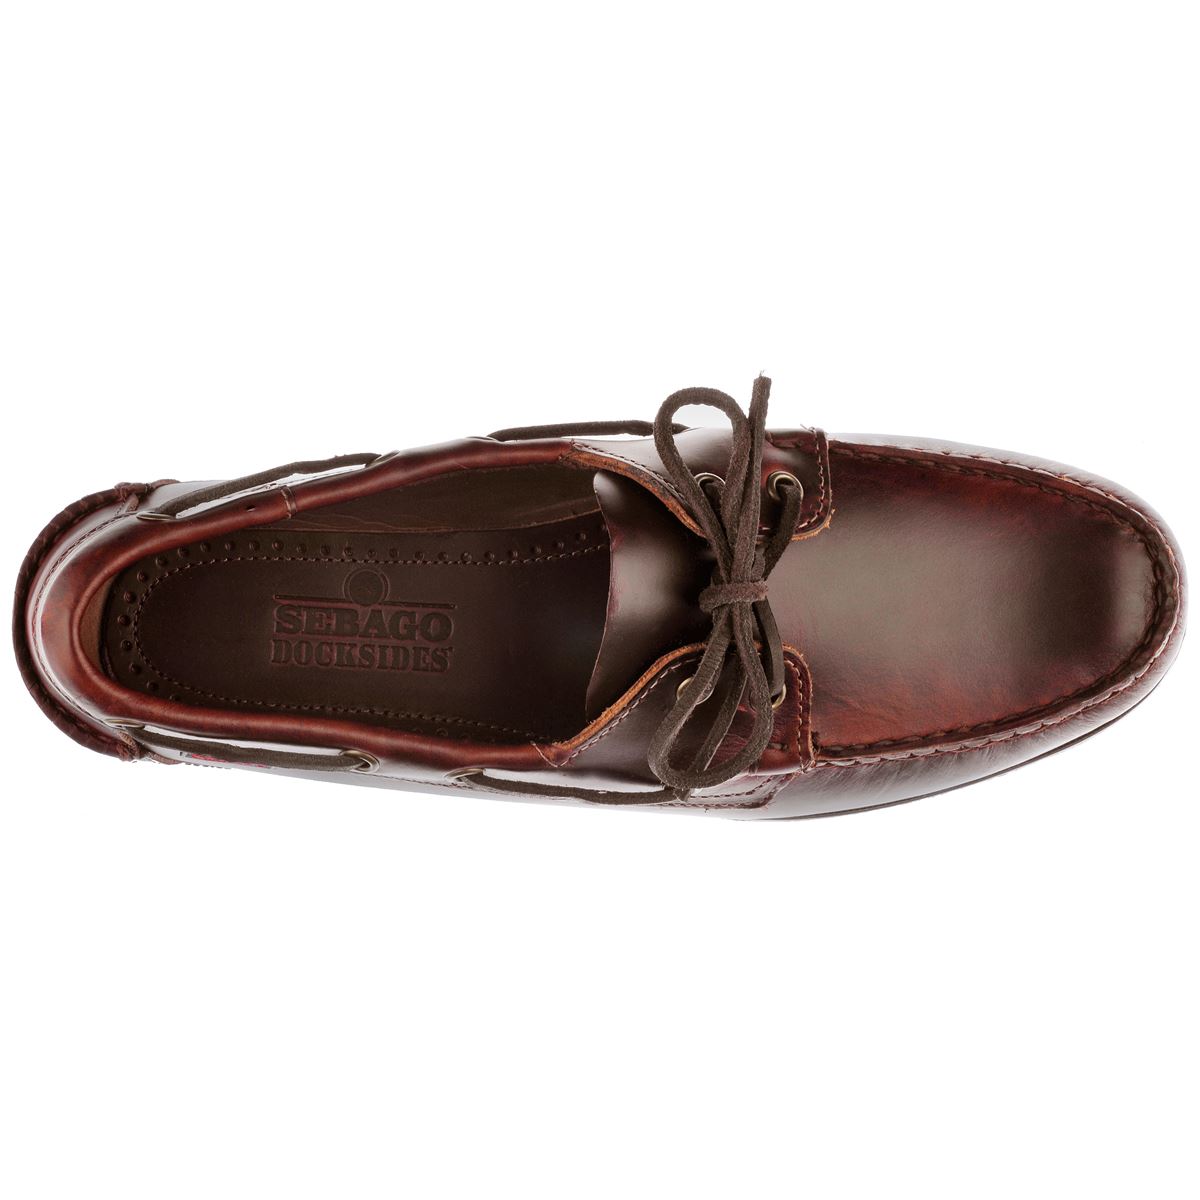 Sebago Endeavor Brown/Gum Boat Shoe 7000gc0925 – Sports 